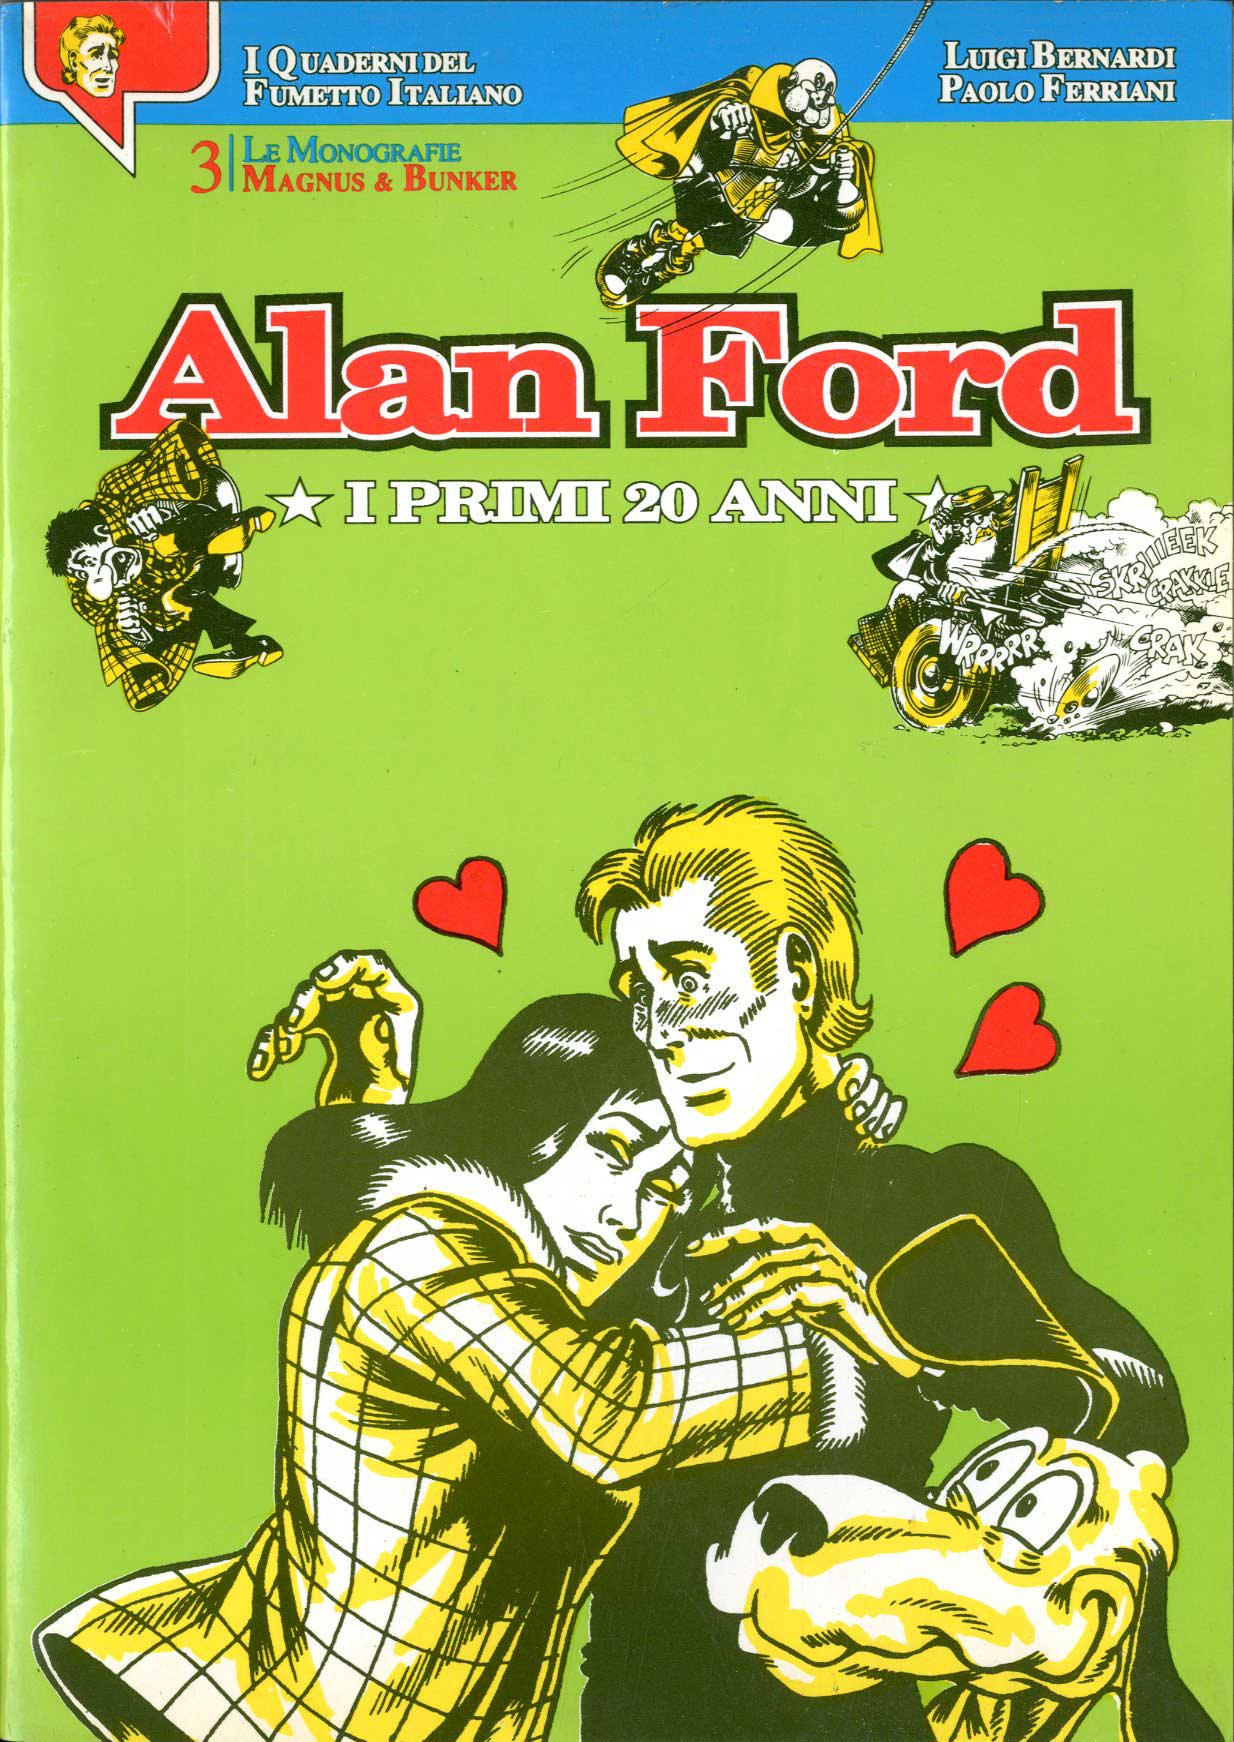 Magnus & Bunker: Alan Ford, I Primi 20 Anni